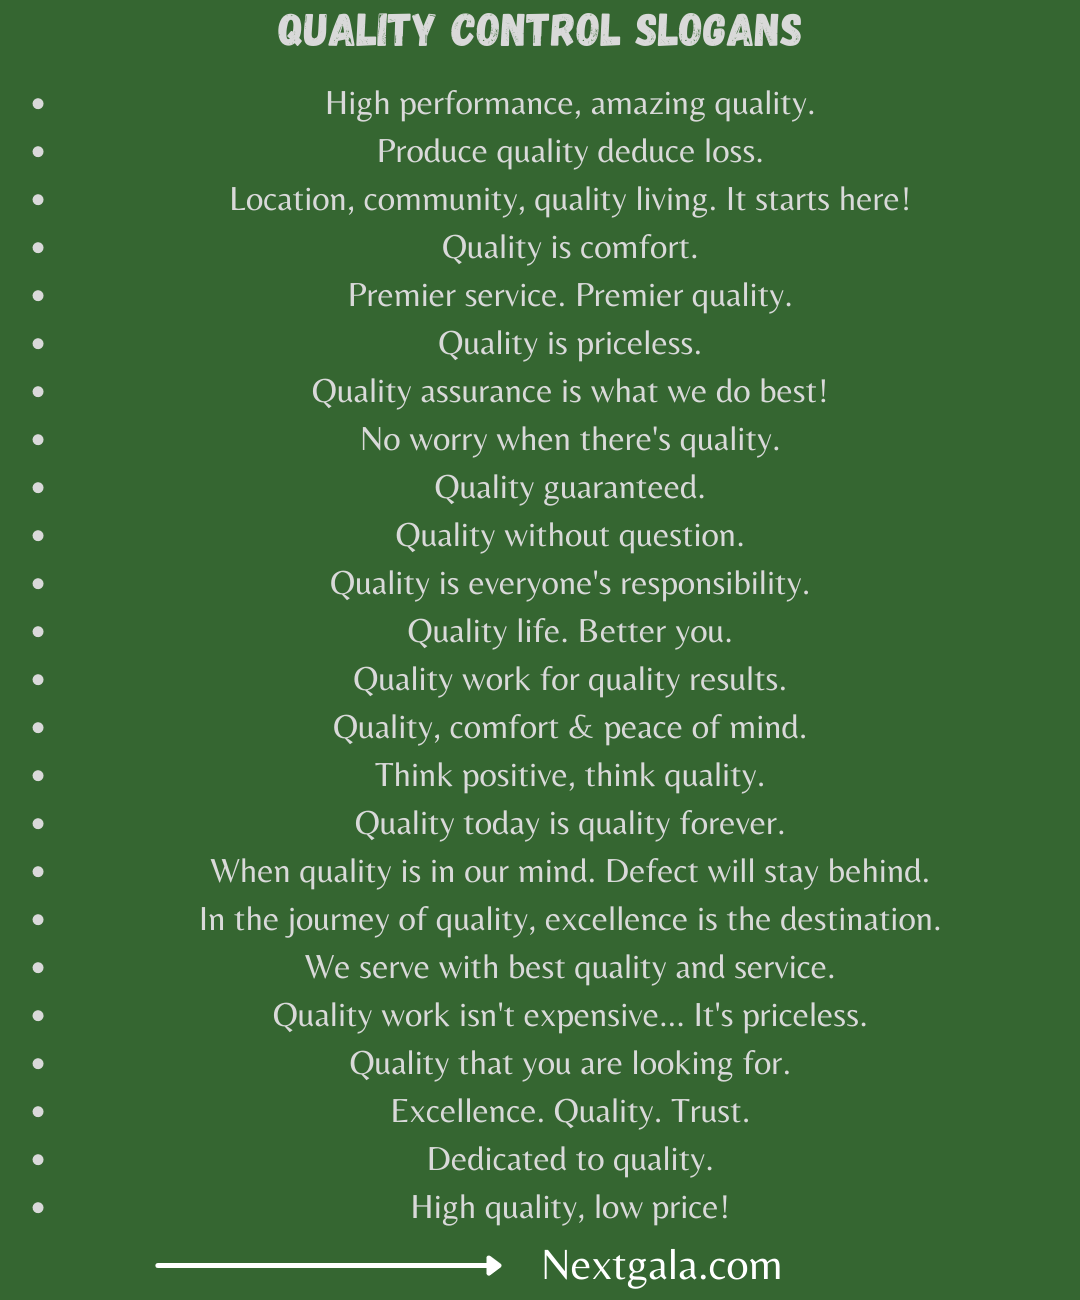 Quality Control Slogans